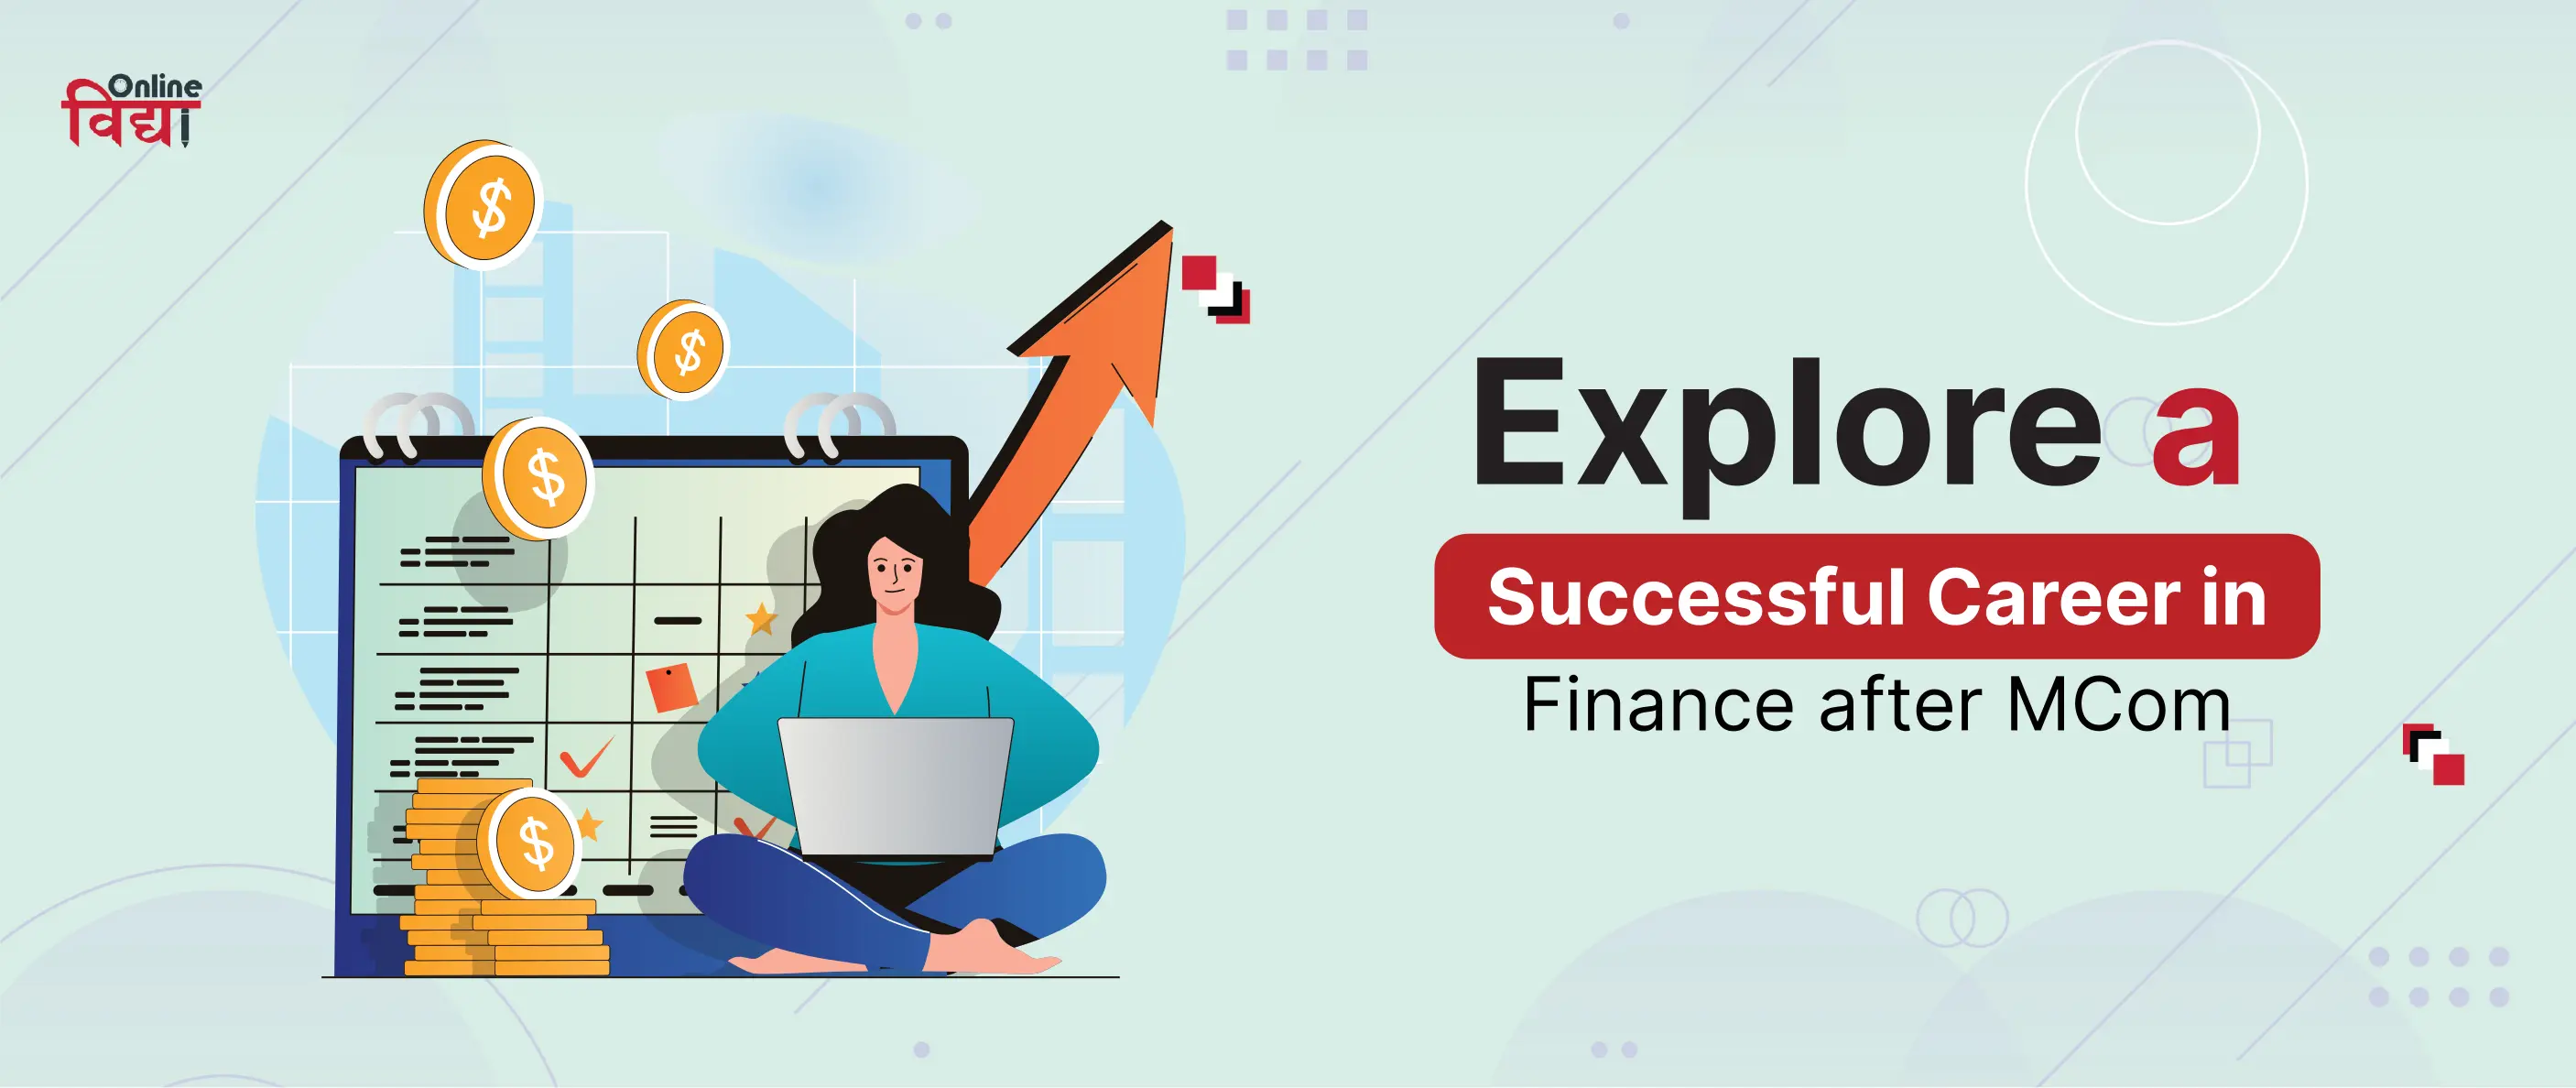 Explore a Successful Career in Finance after MCom